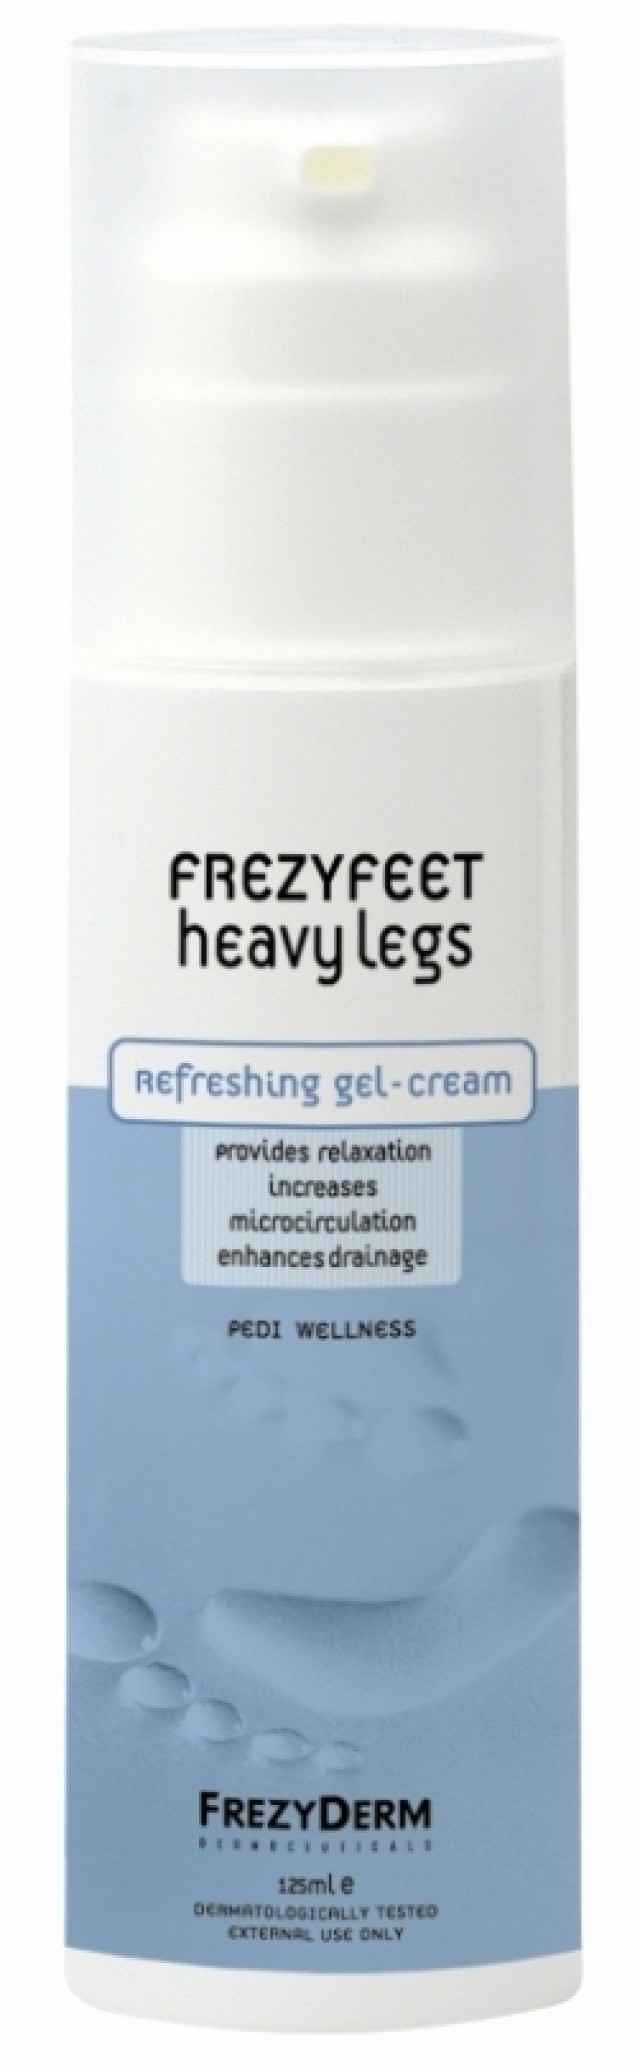 Frezyderm Frezyfeet Heavy Legs 125 ml product photo